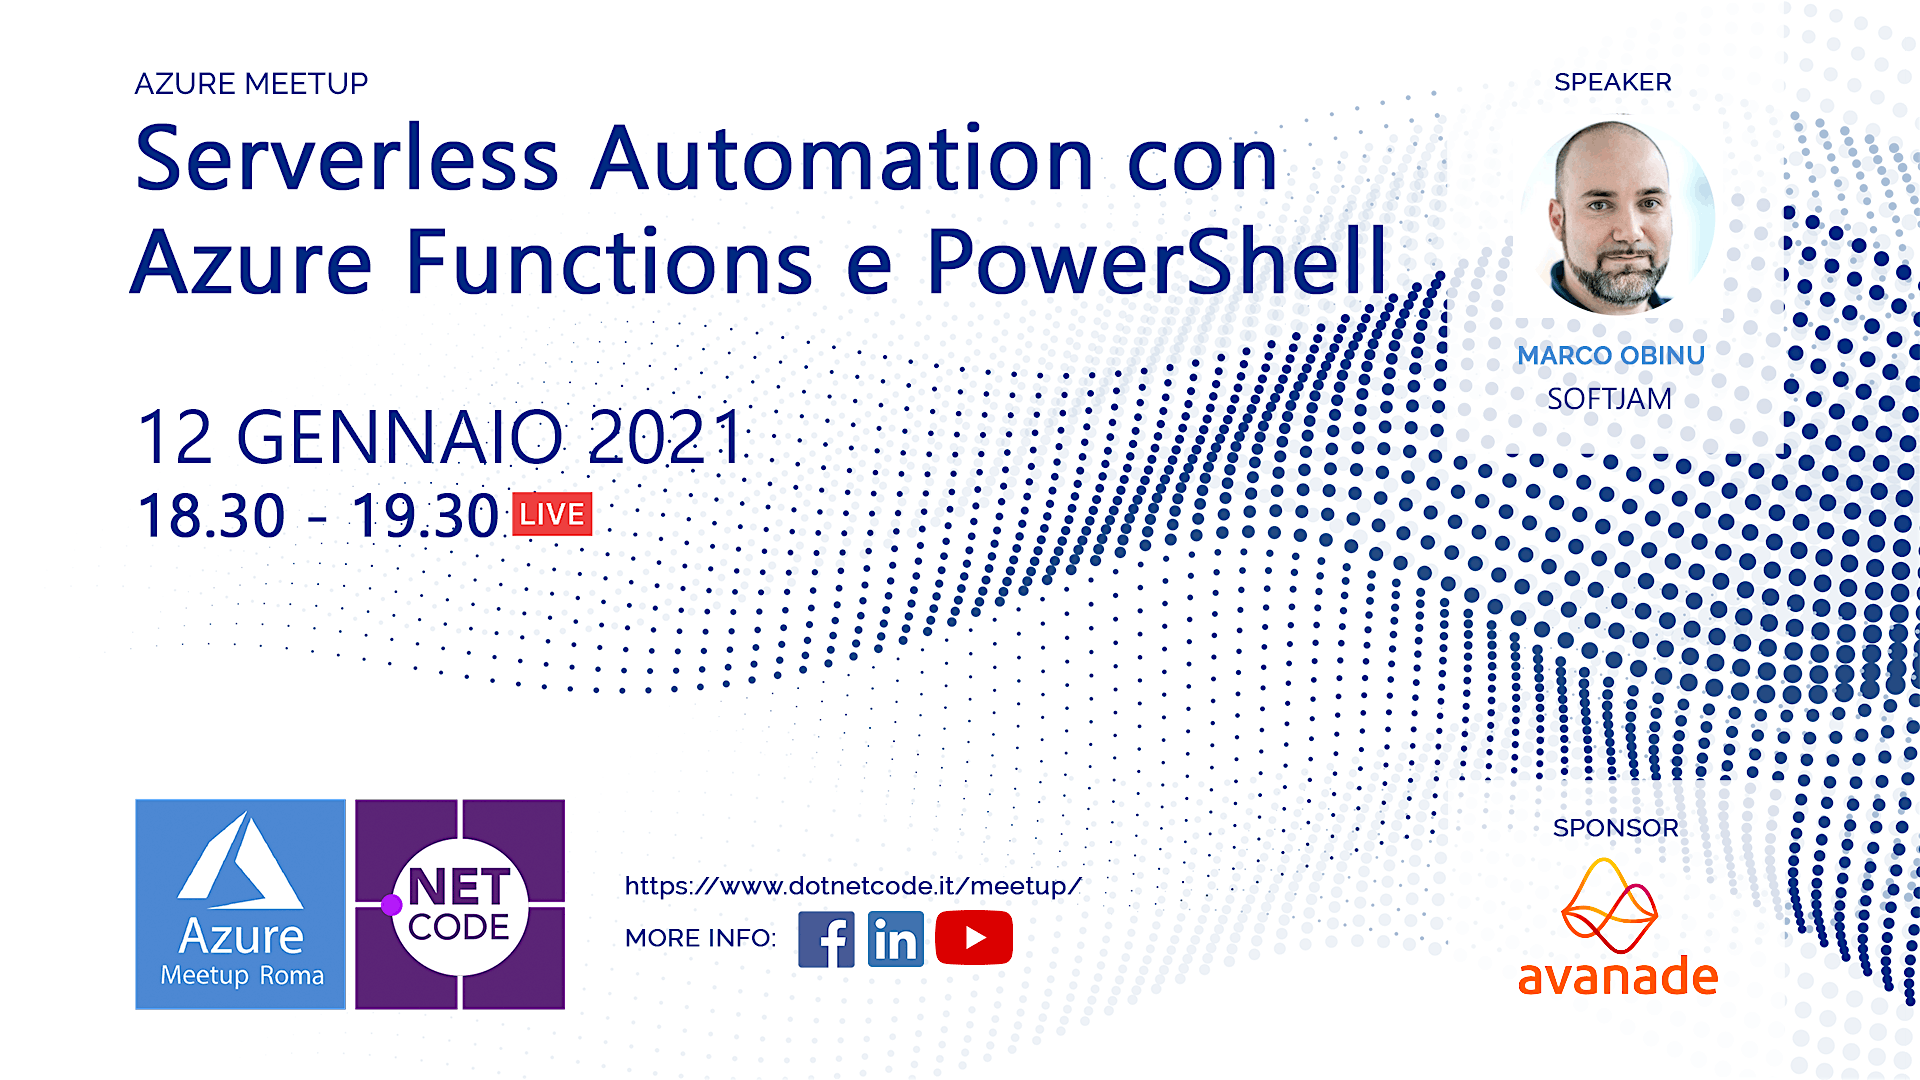 Azure Meetup: Serverless Automation con Azure Functions e PowerShell